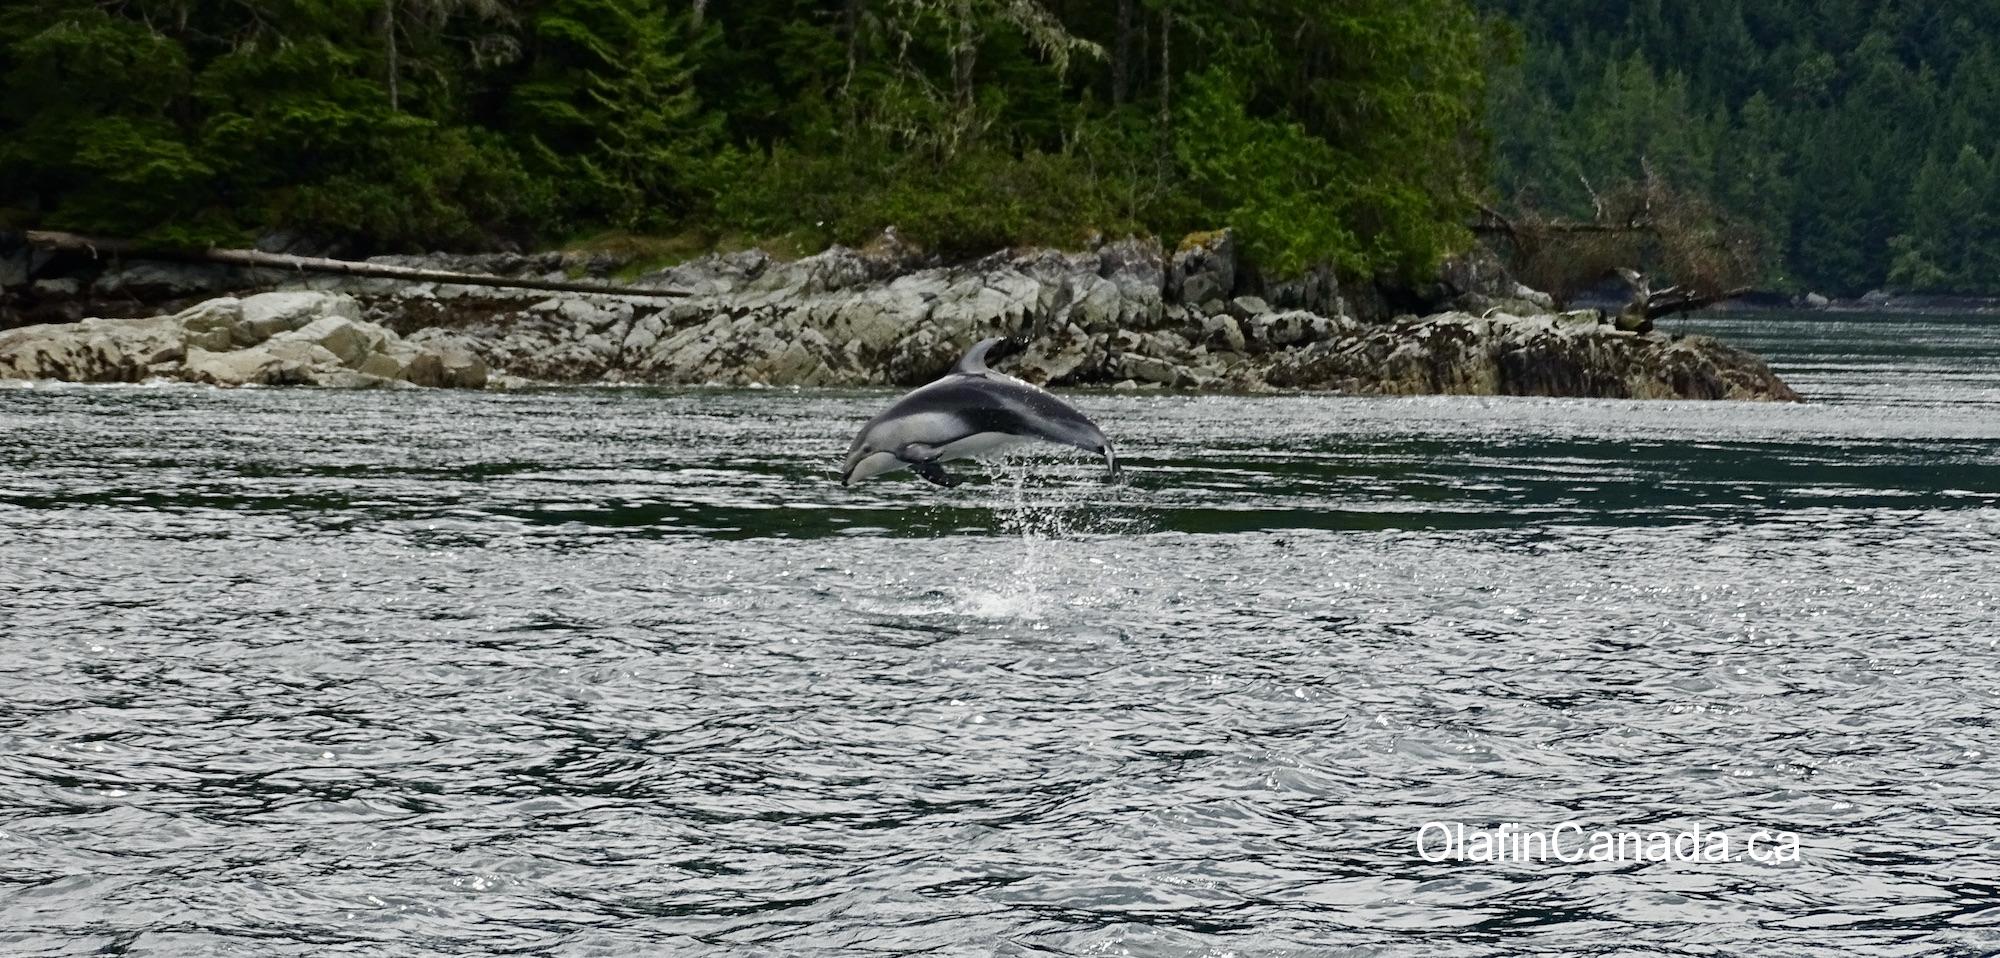 Jumping dolphin near Campbell River #olafincanada #britishcolumbia #discoverbc #wildlife #campbellriver #dolphin